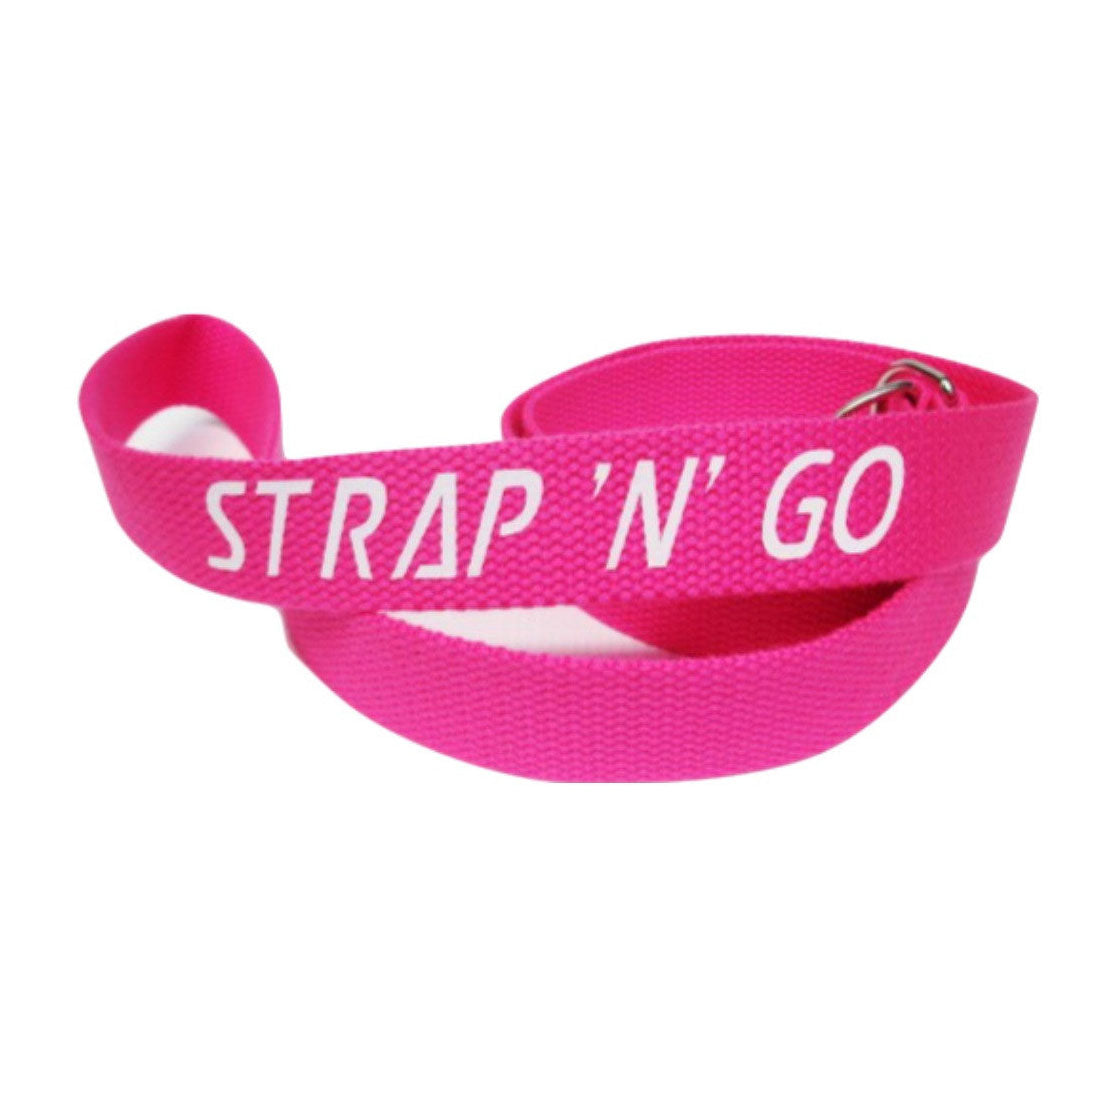 Strap N Go Skate Noose/Leash - Solid Colours Pink Roller Skate Accessories